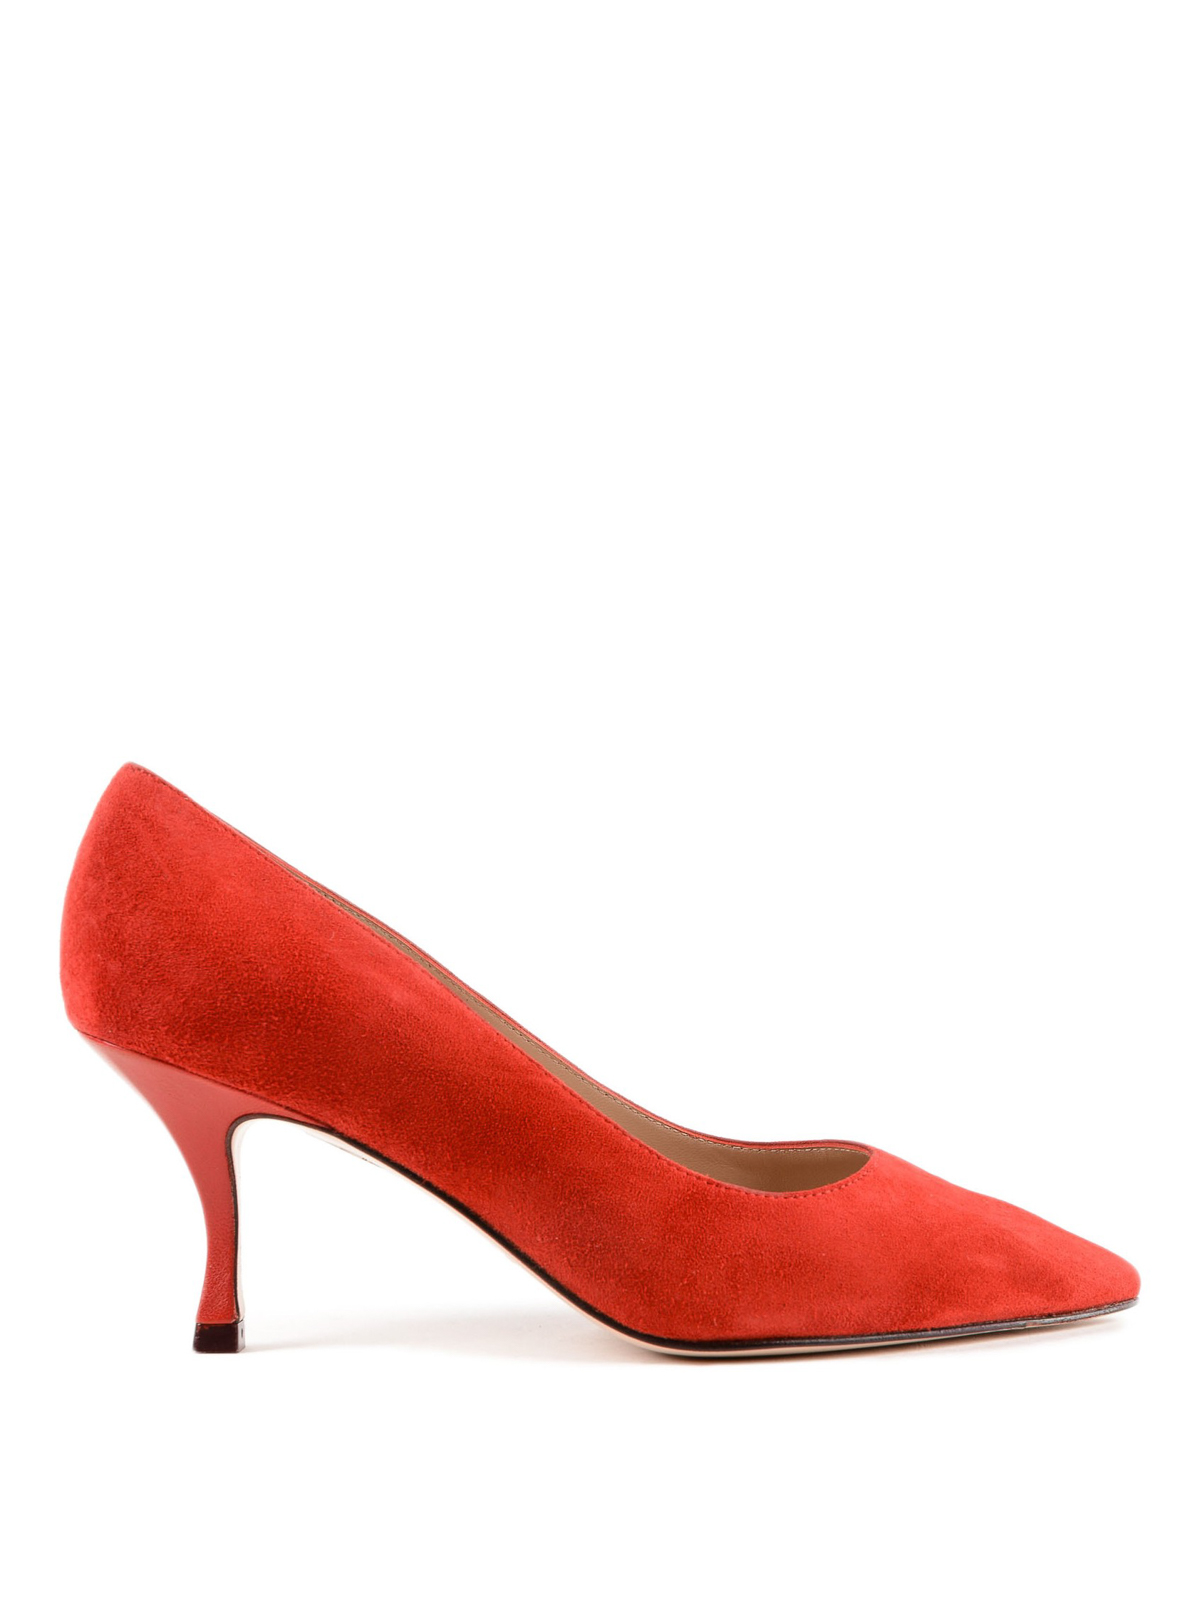 Court shoes Stuart Weitzman - Tippi red suede pumps ...